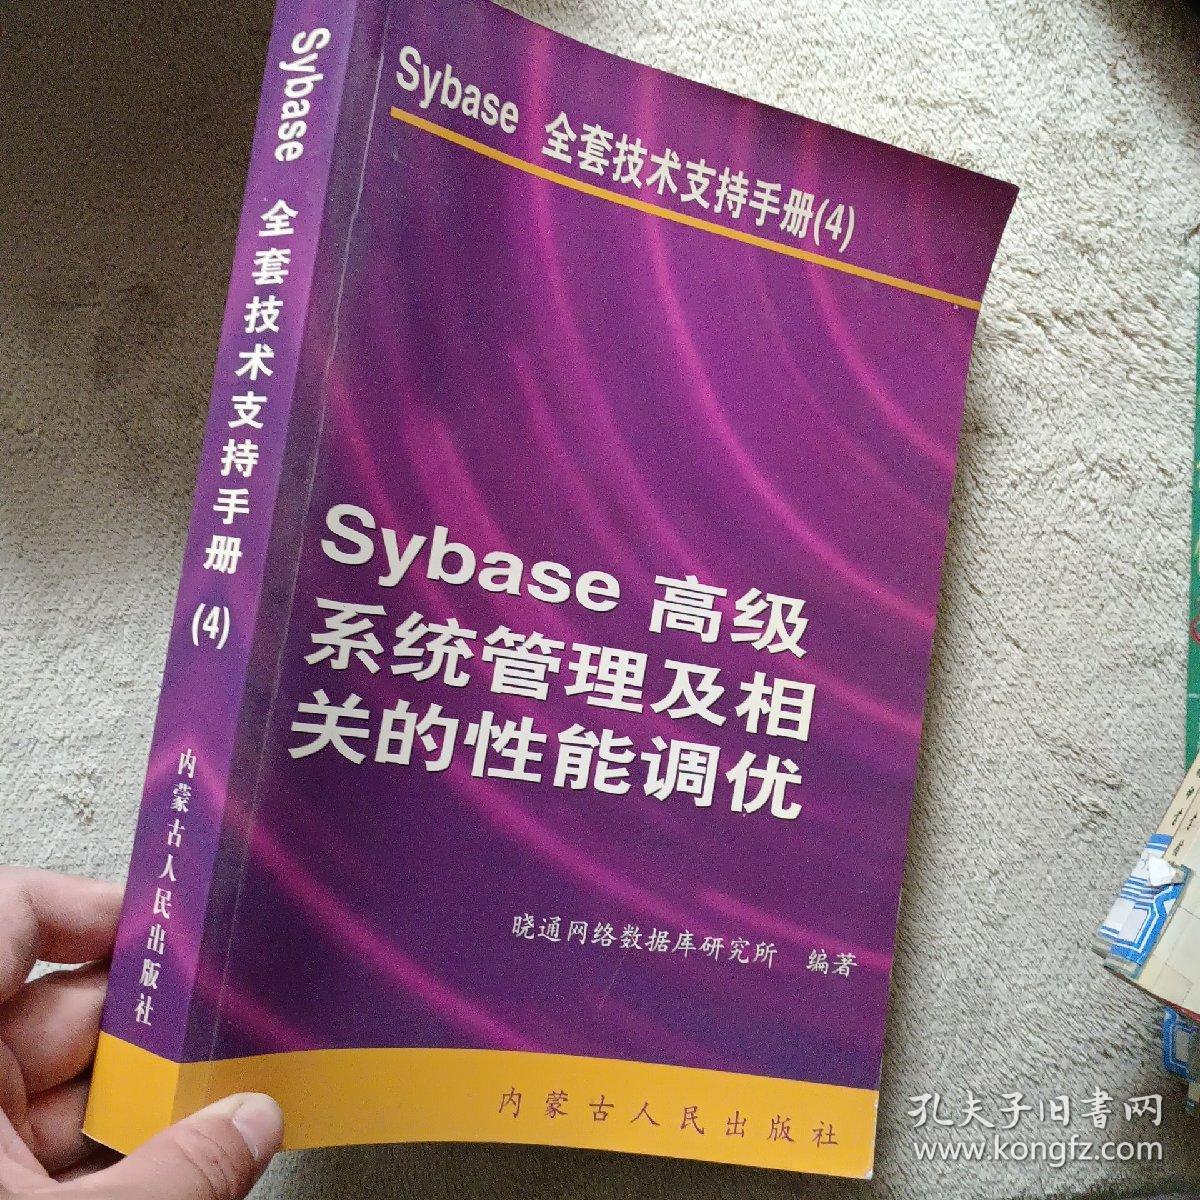 Sybase 全套技术支持手册  4